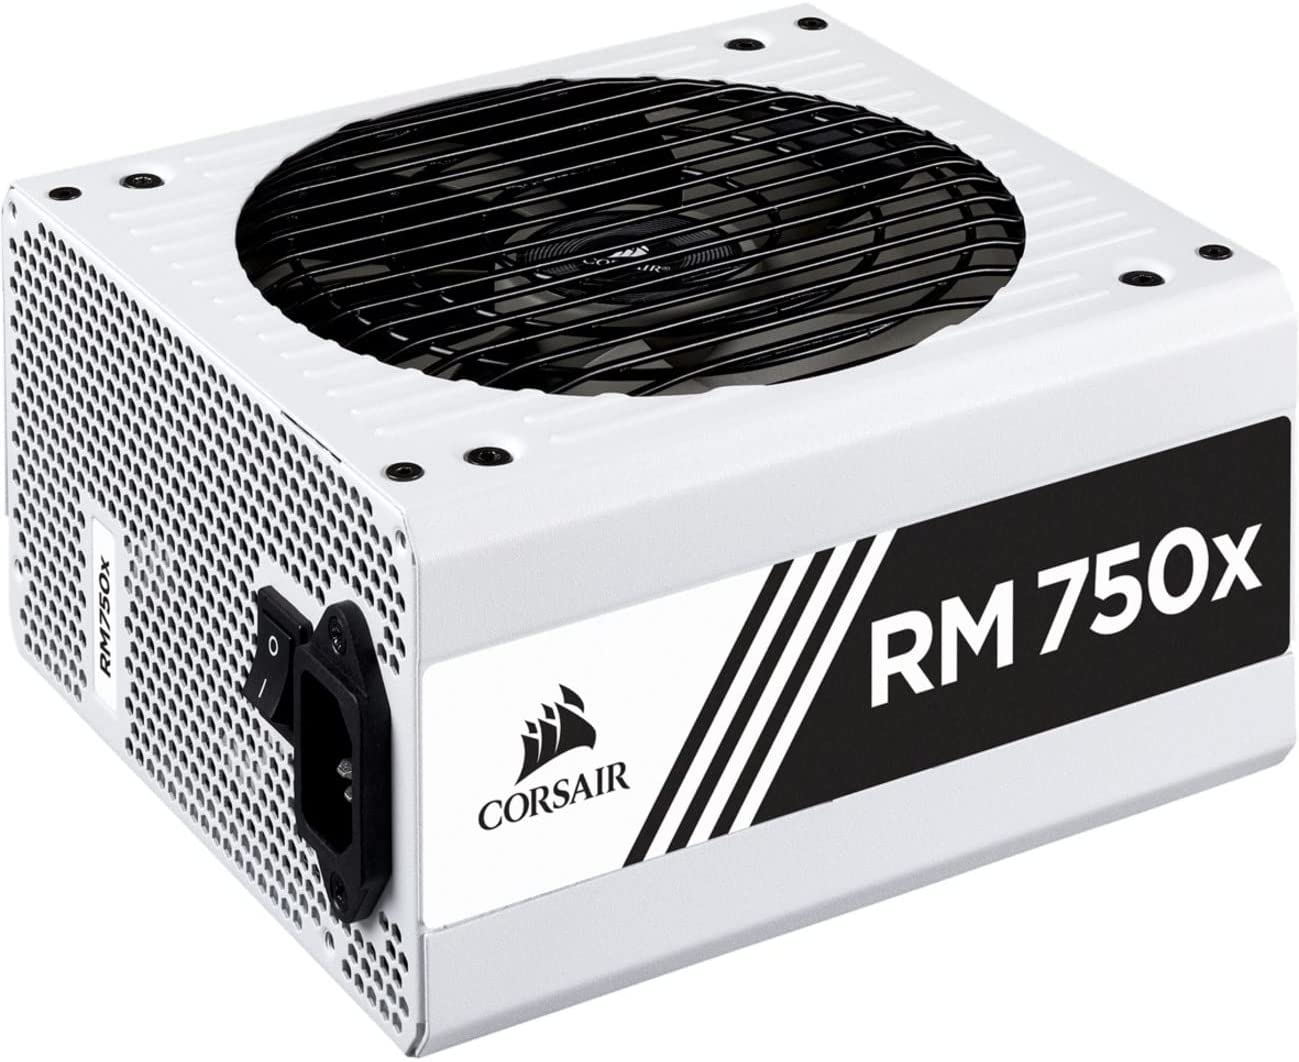 Corsair RM750x power supply.